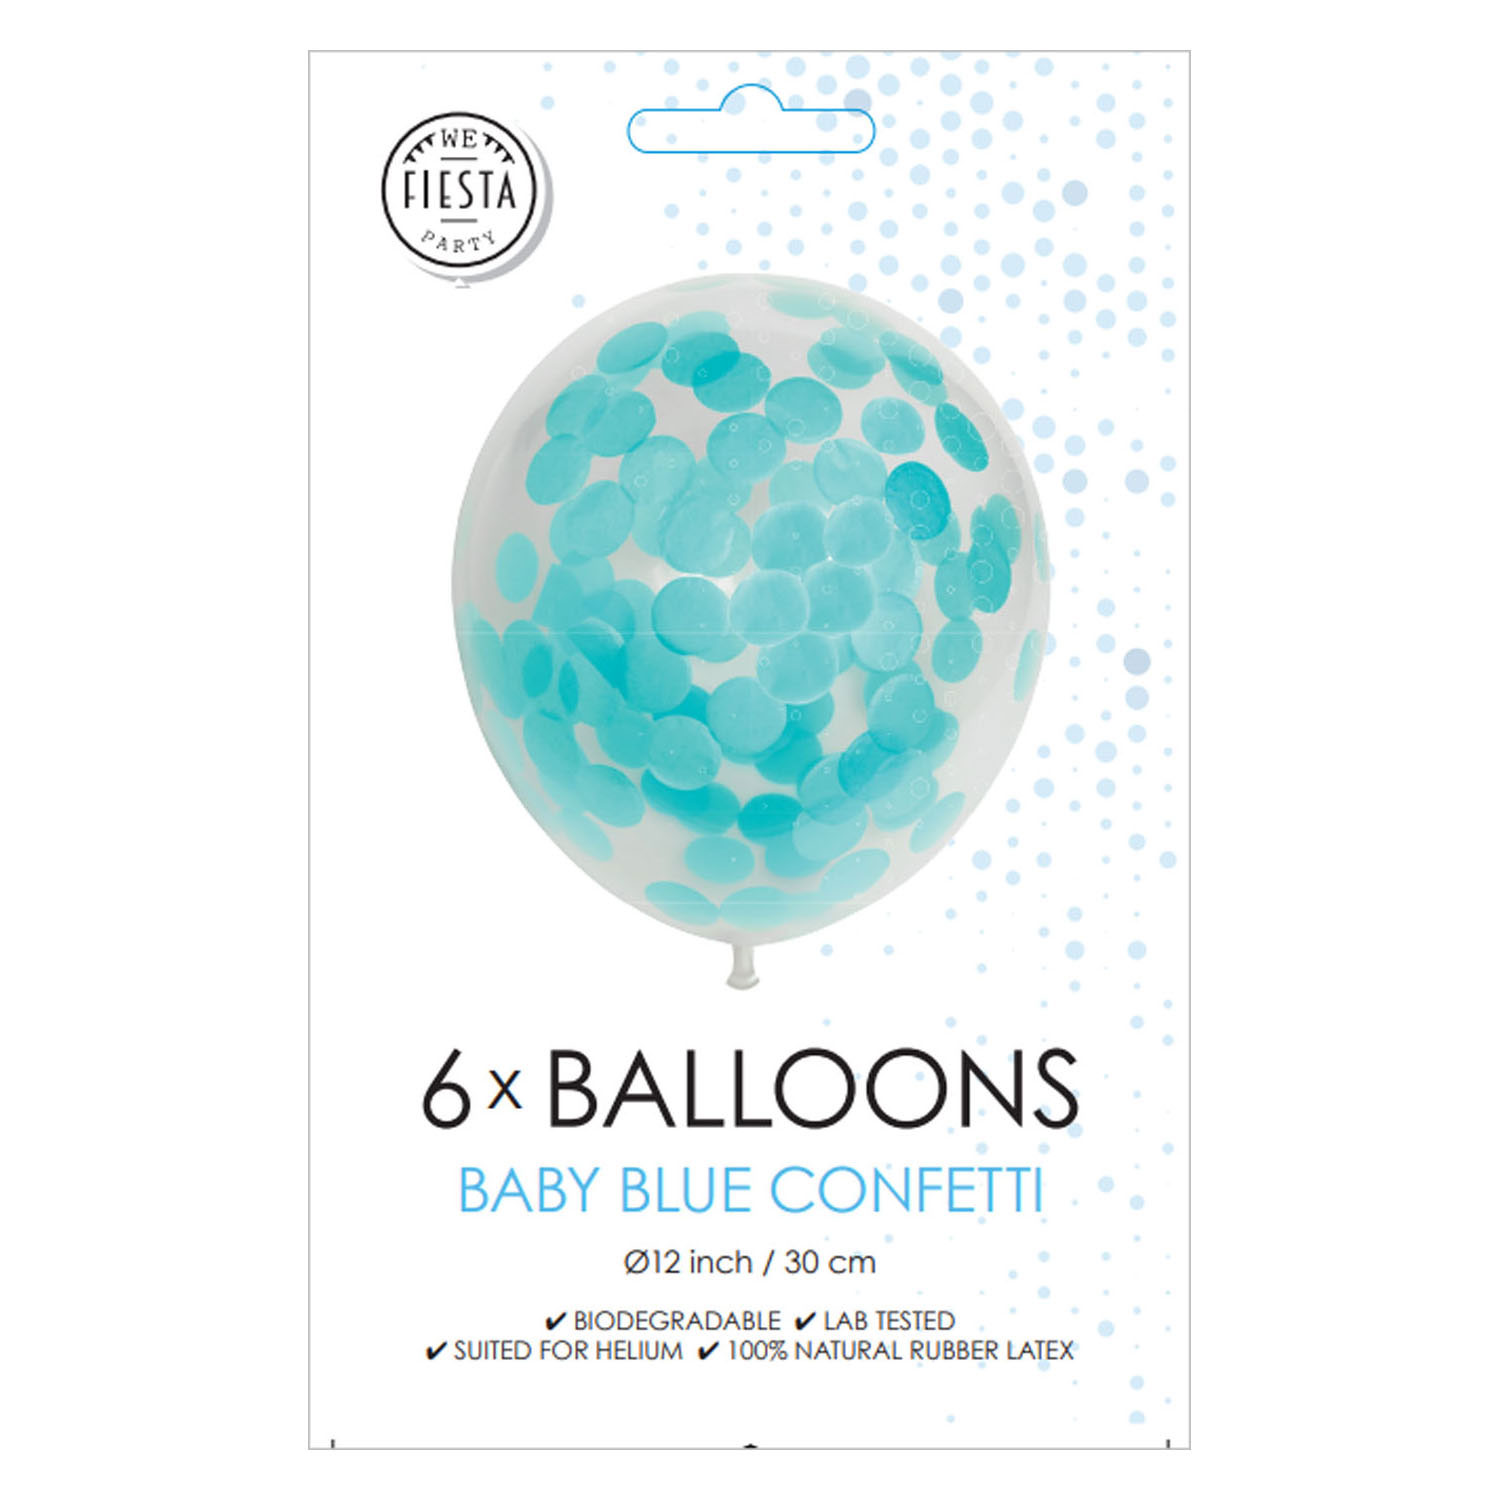 Konfetti-Luftballons, Papierkonfetti, Babyblau, 30 cm, 6 Stück.